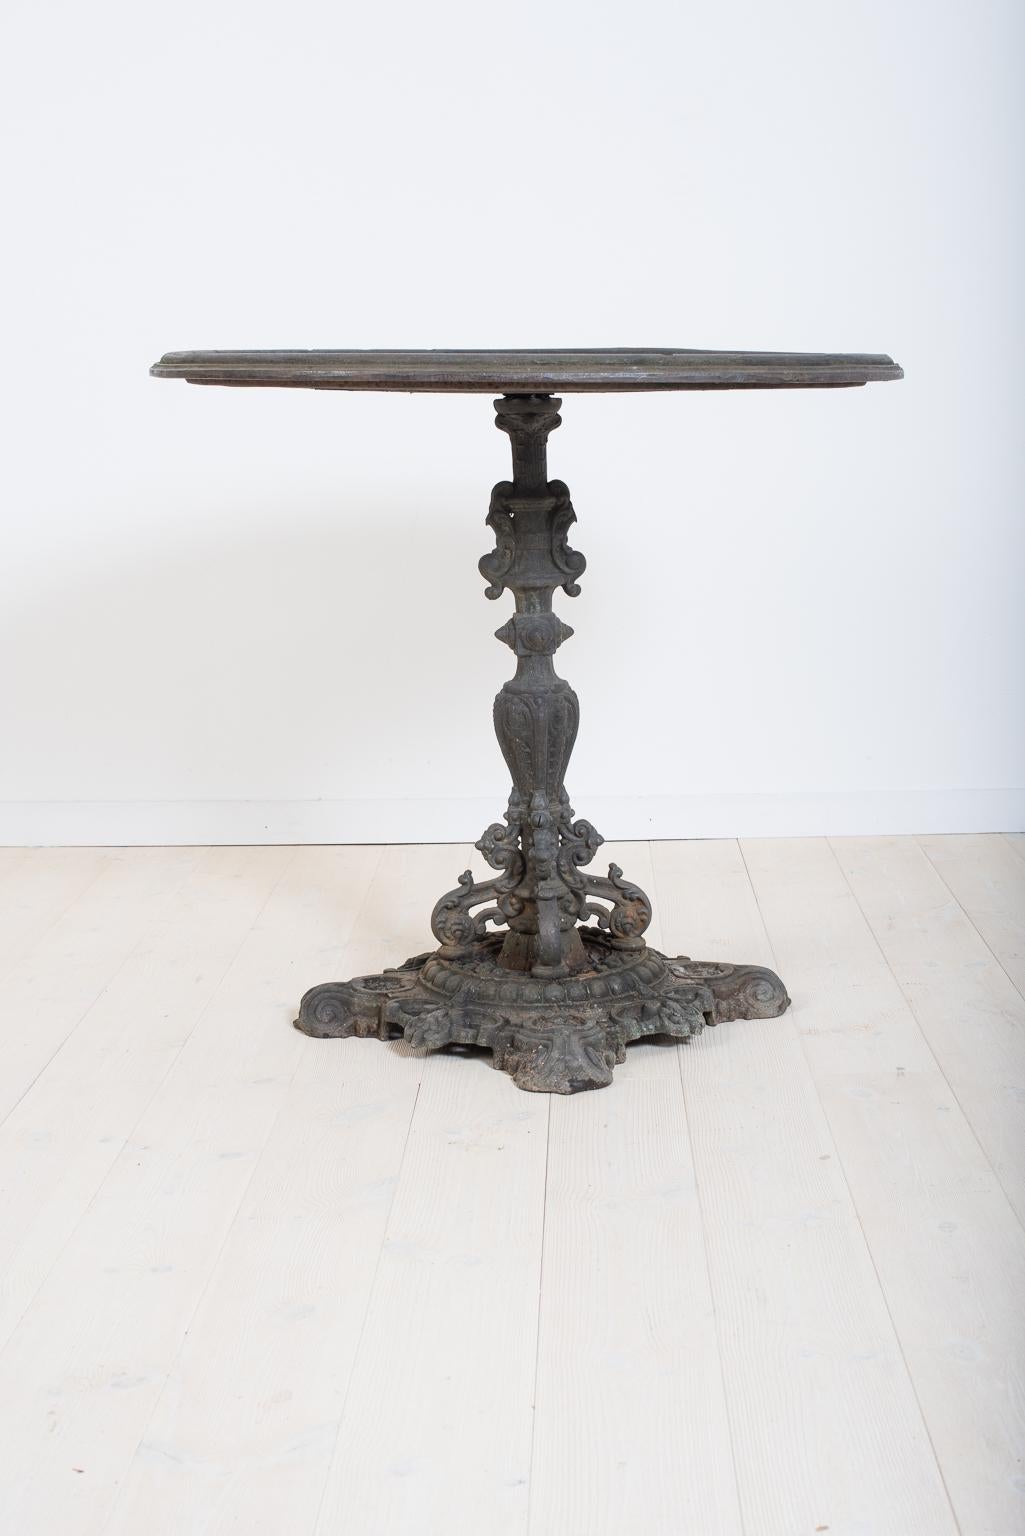 Rococo Revival Antique Rococo Table in Cast Iron